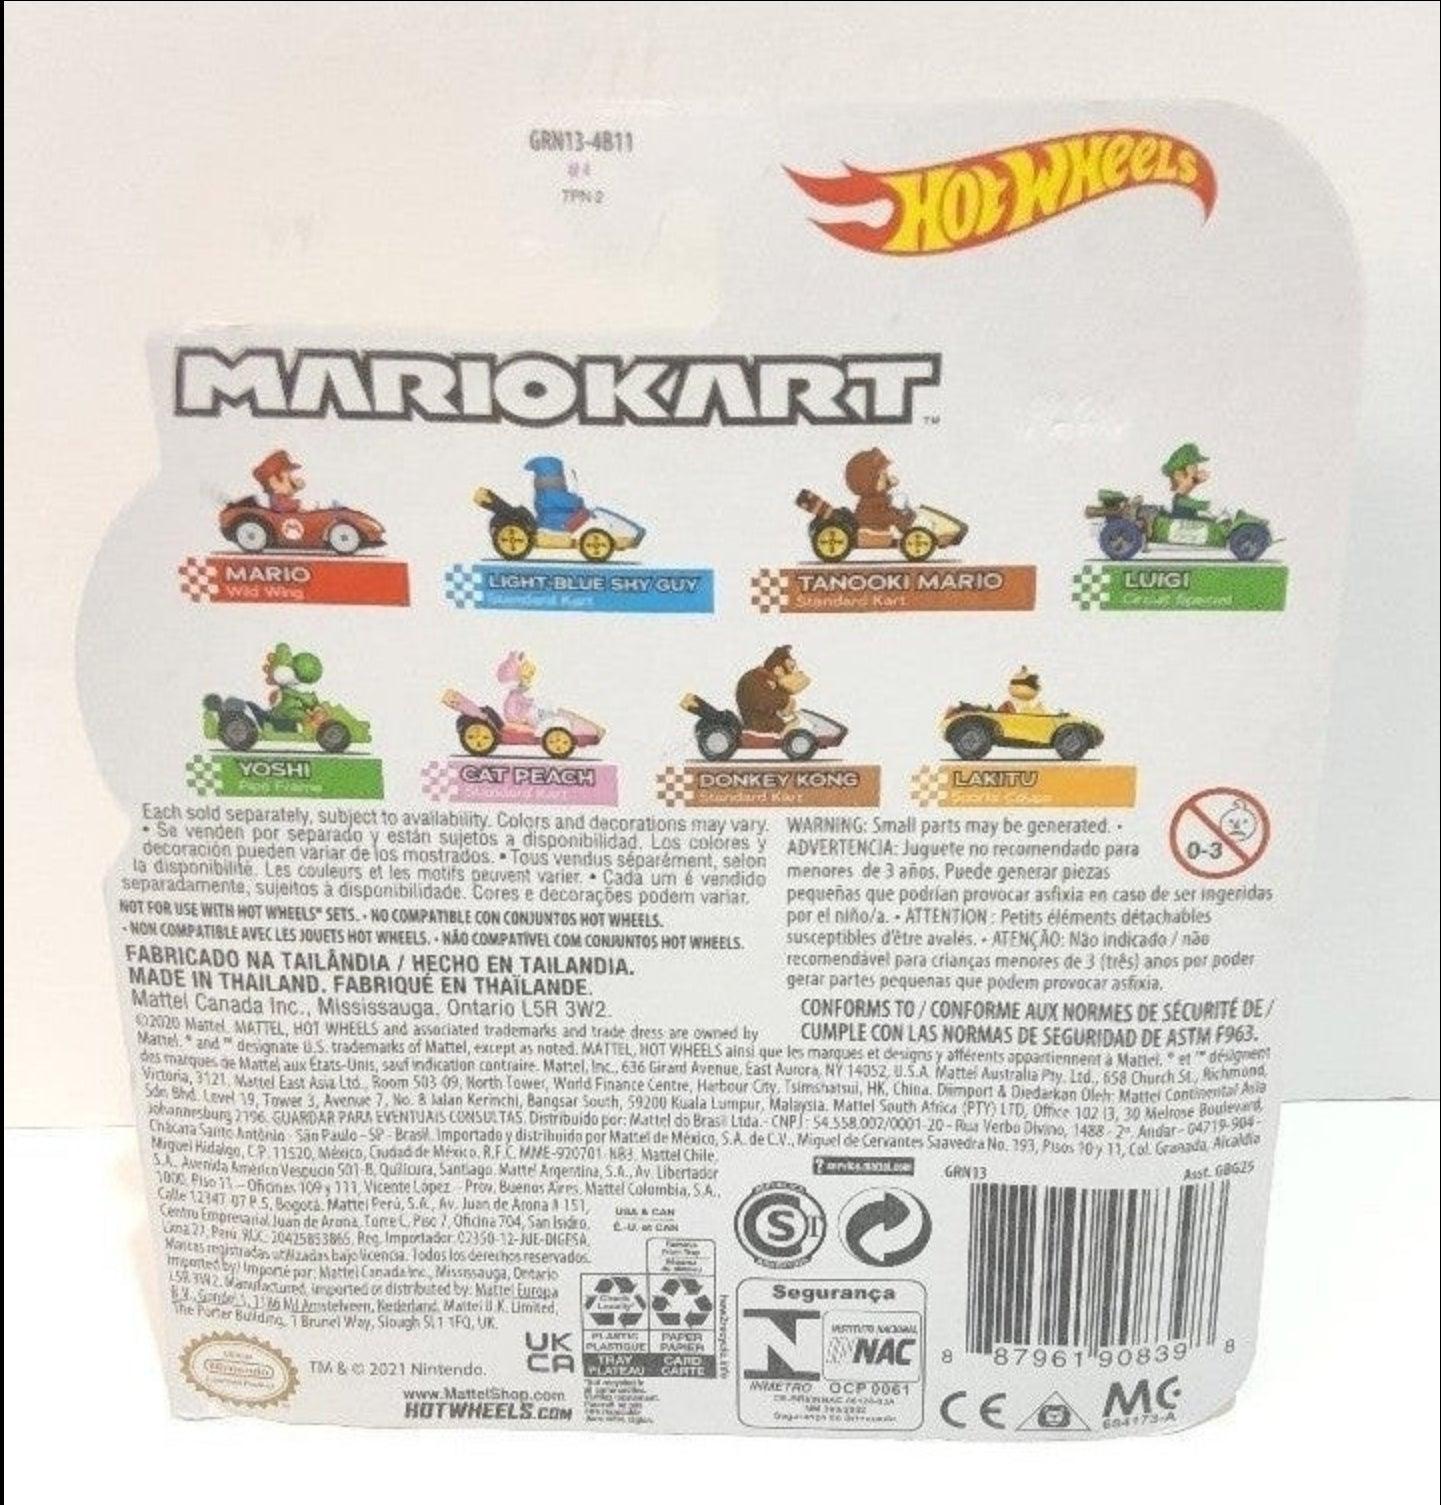 Hot Wheels Super Mario Bros Mario Kart Cat Princess Peach Toy Go-Kart Car - Logan's Toy Chest